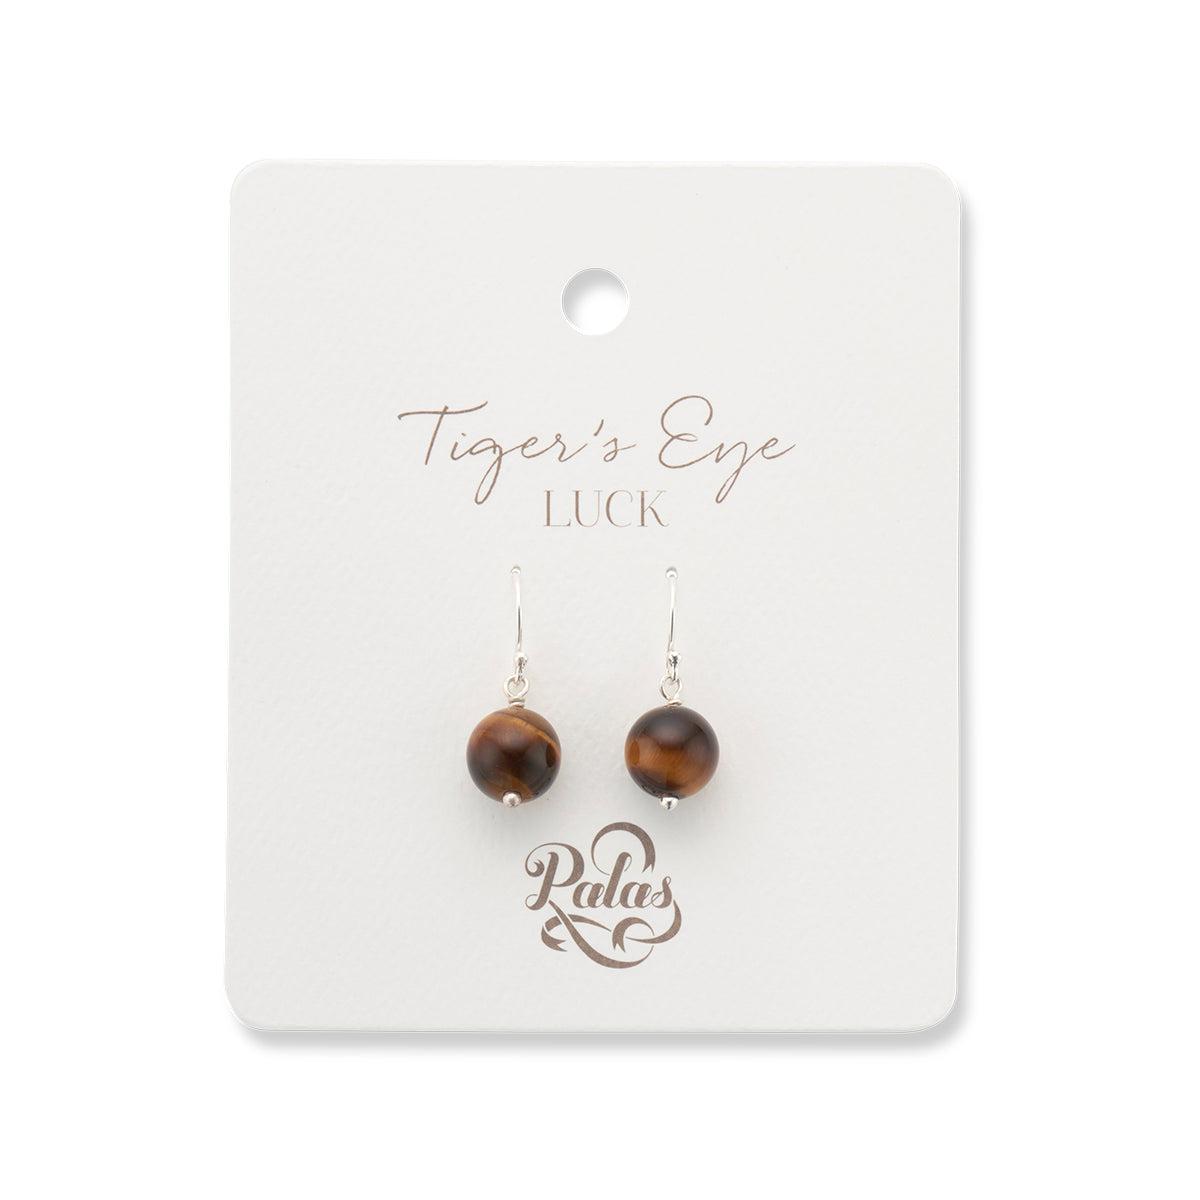 Tiger's Eye Healing Gem Earrings-Jewellery-Palas-The Bay Room